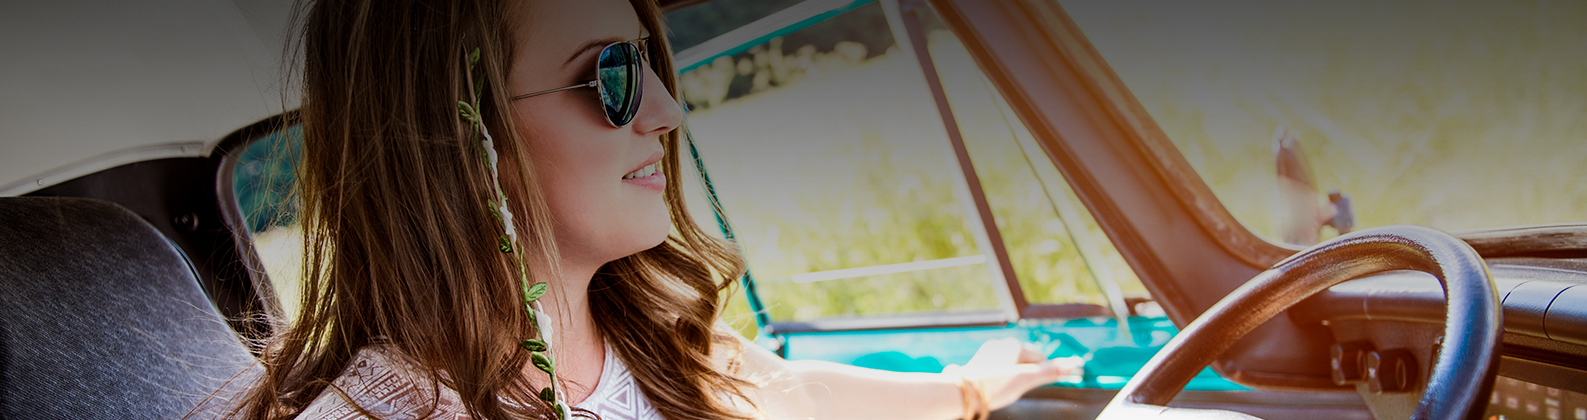 girl-driving-sunglasses